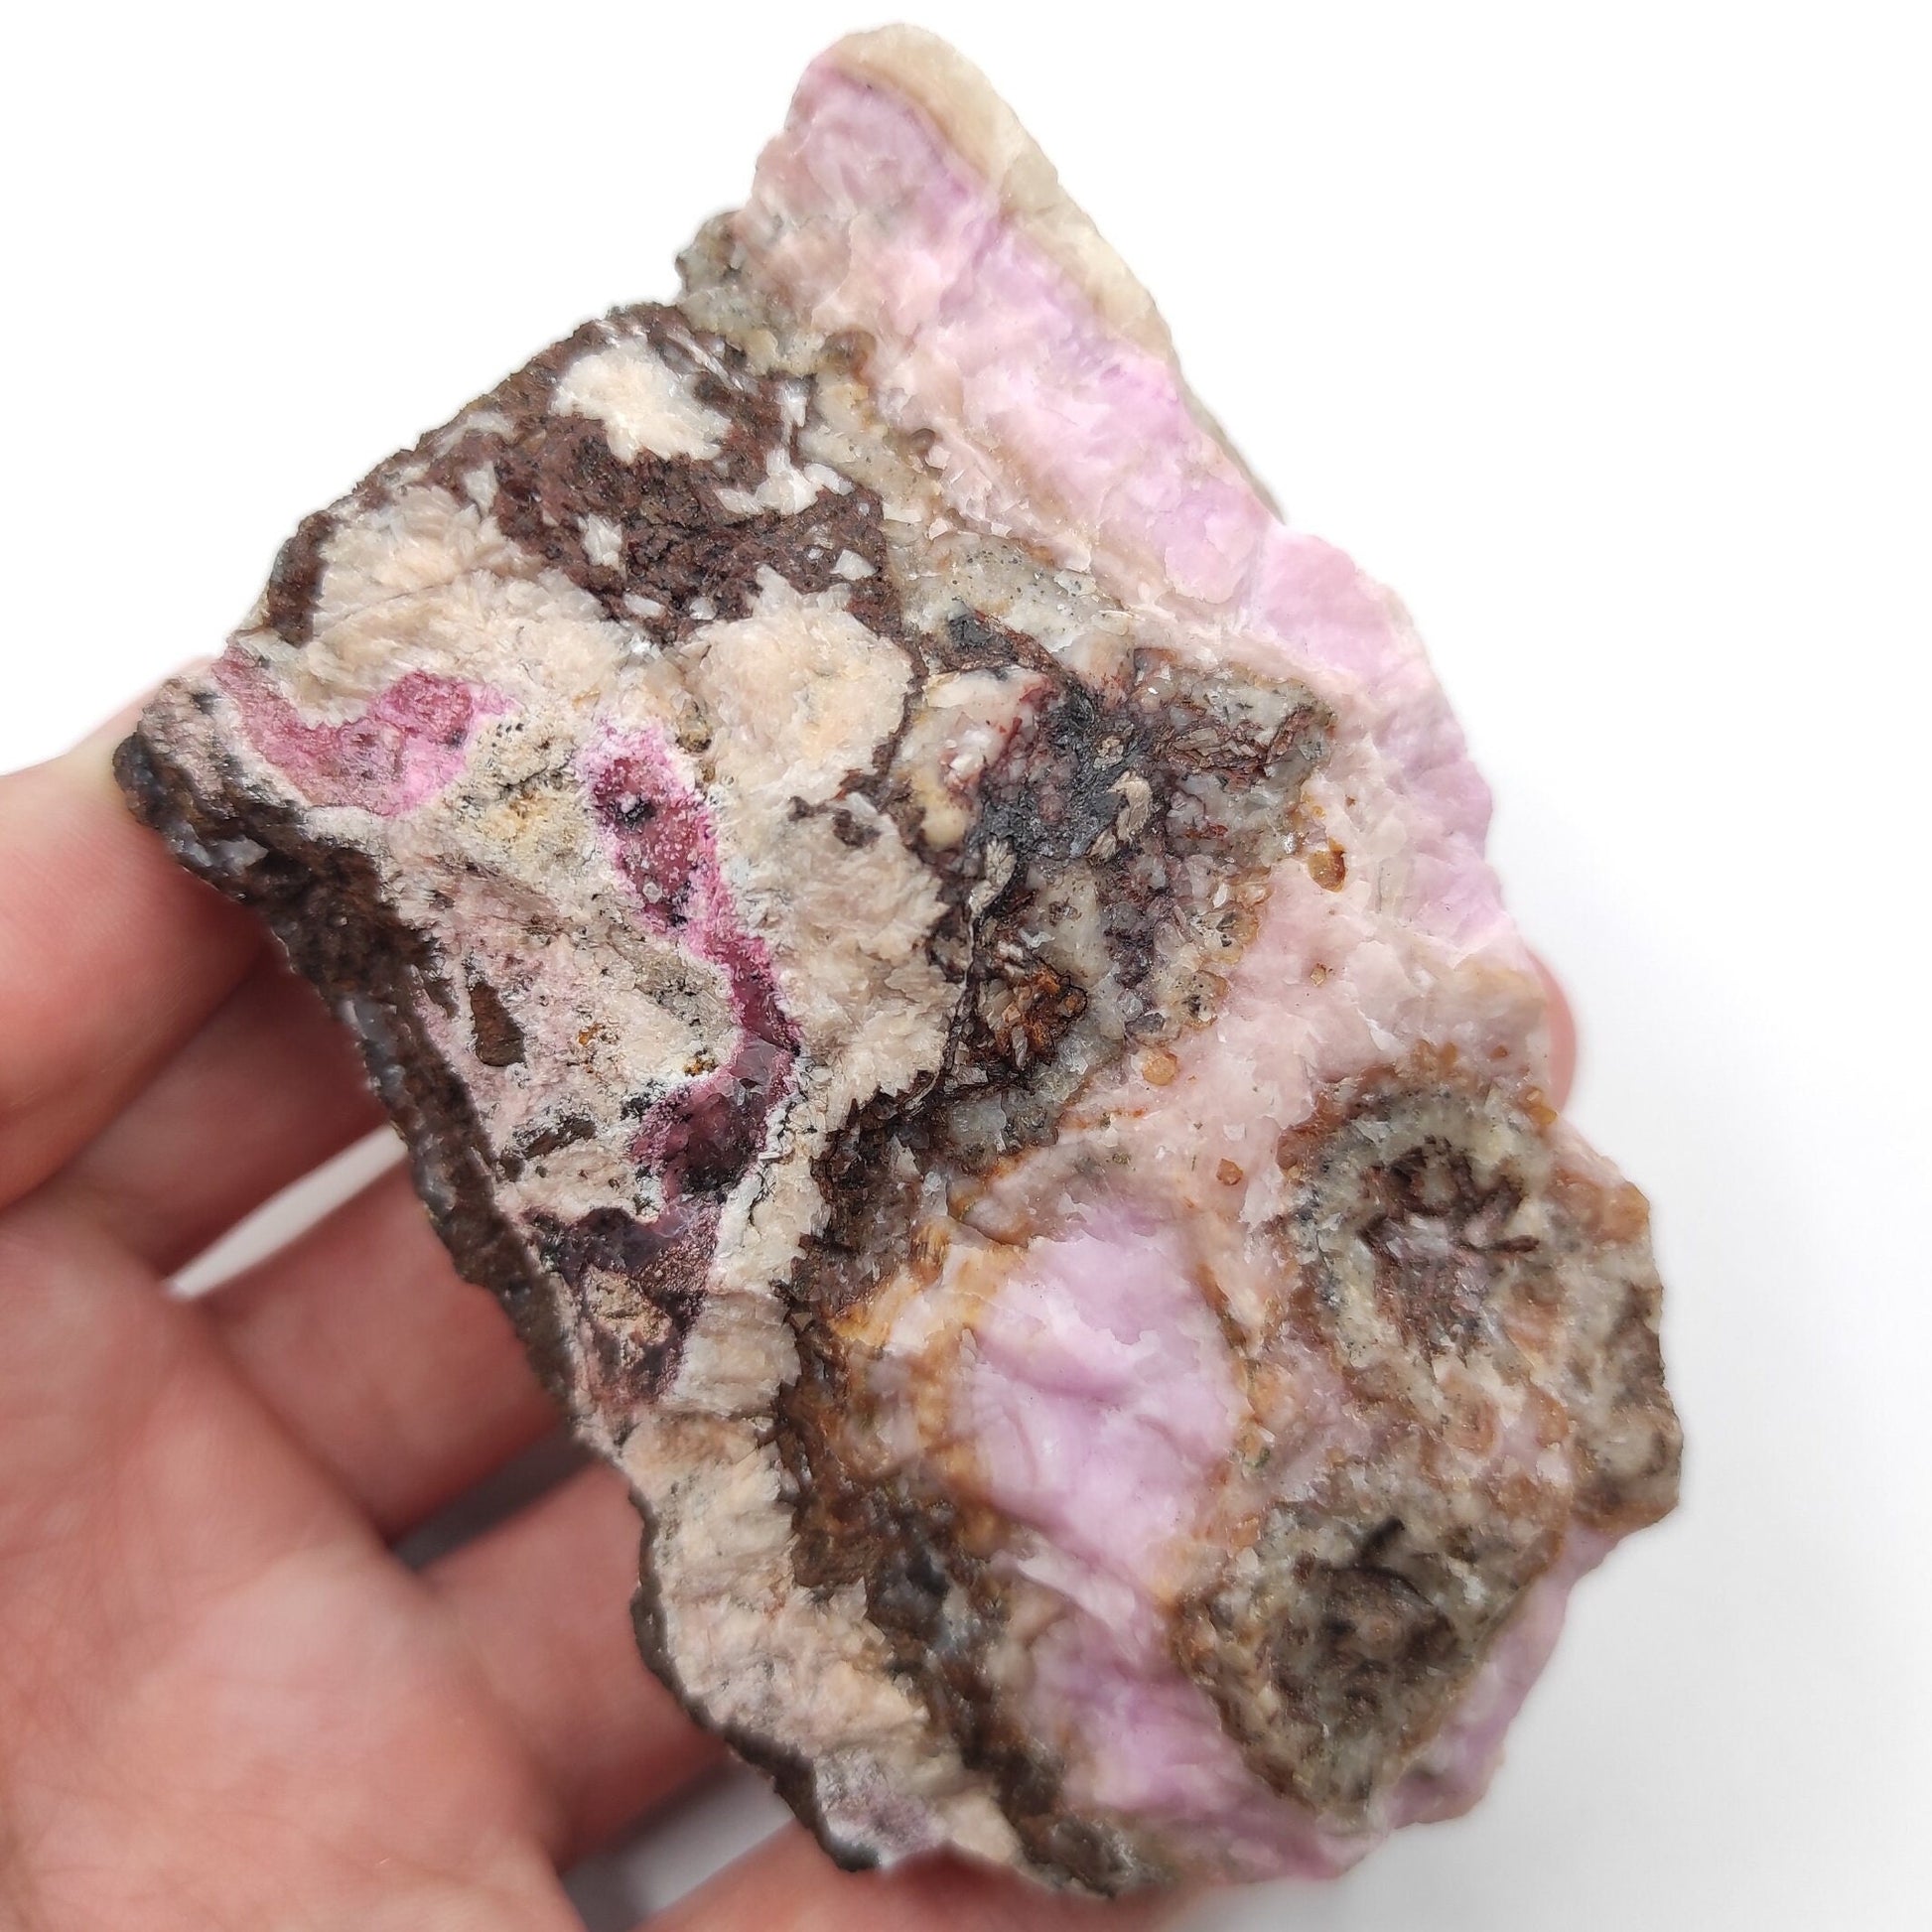 242g Cobalto Calcite in Matrix - Pink Cobalt Calcite from Bou Azzer, Morocco - Salrose Crystal - Cobaltocalcite Mineral Specimen